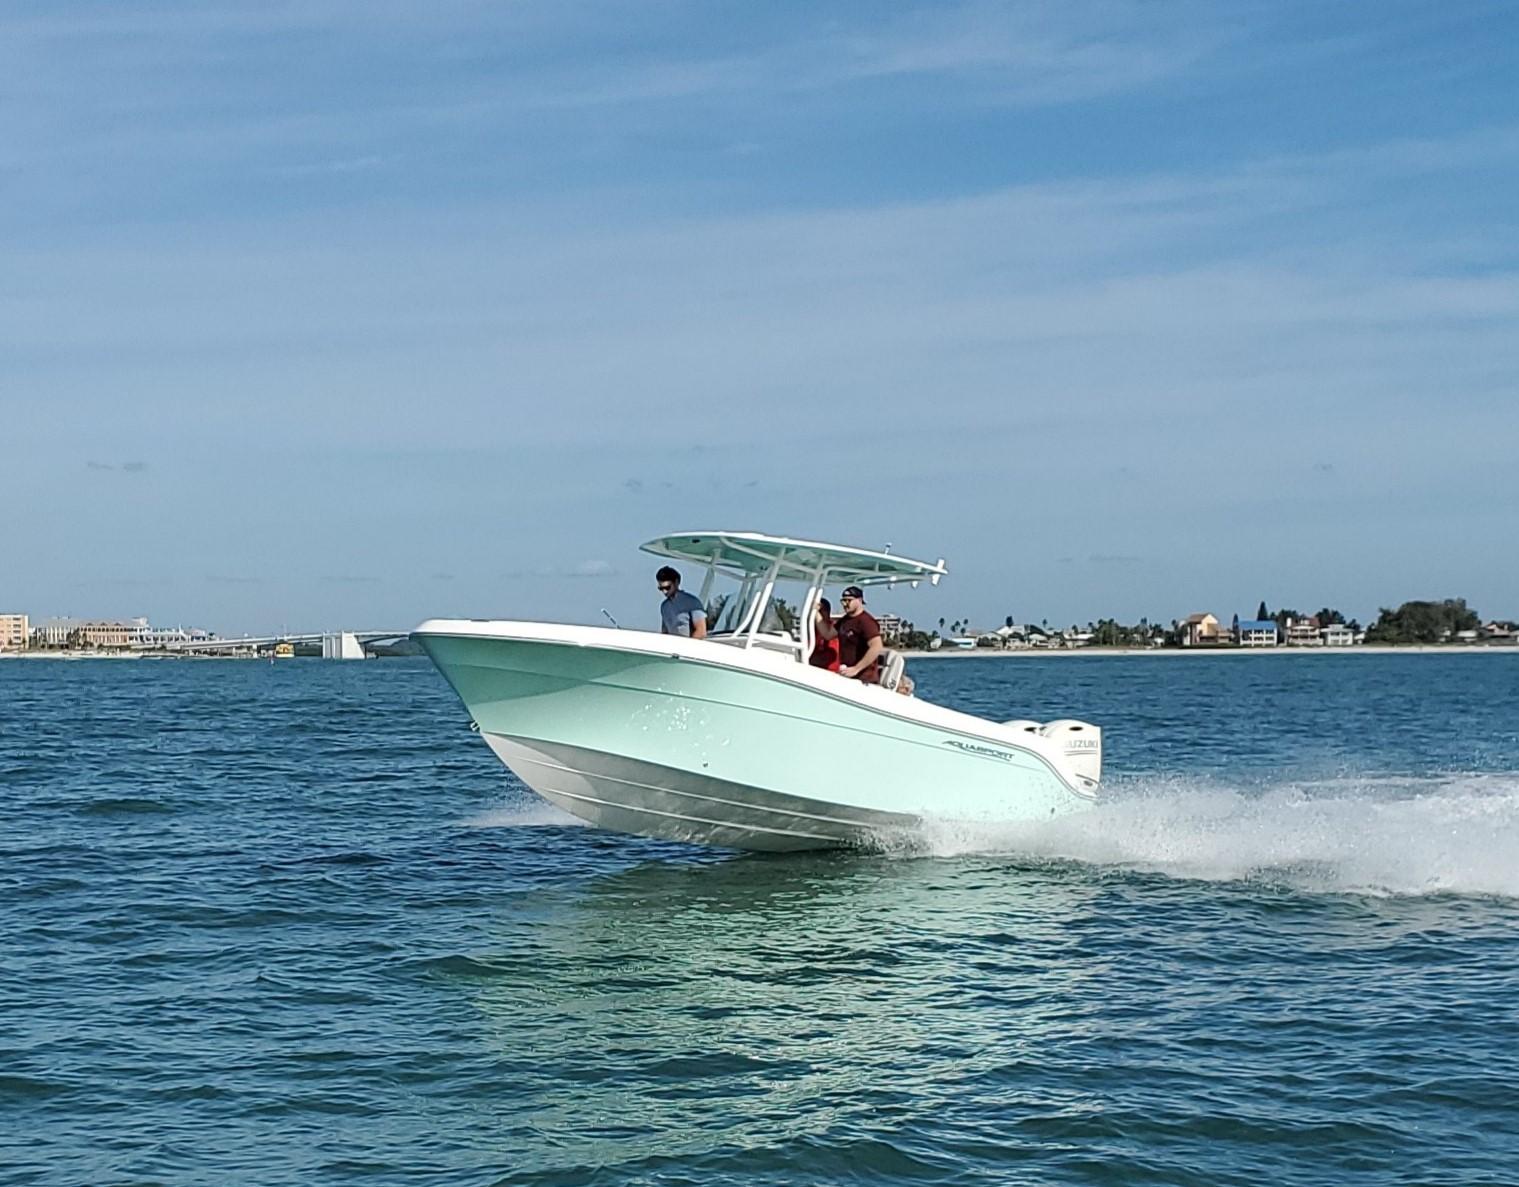 A 2022 Aquasport 2500 center console fishing boat. Photo via Worldwide Yacht Sales Inc. in Cape Coral, FL.